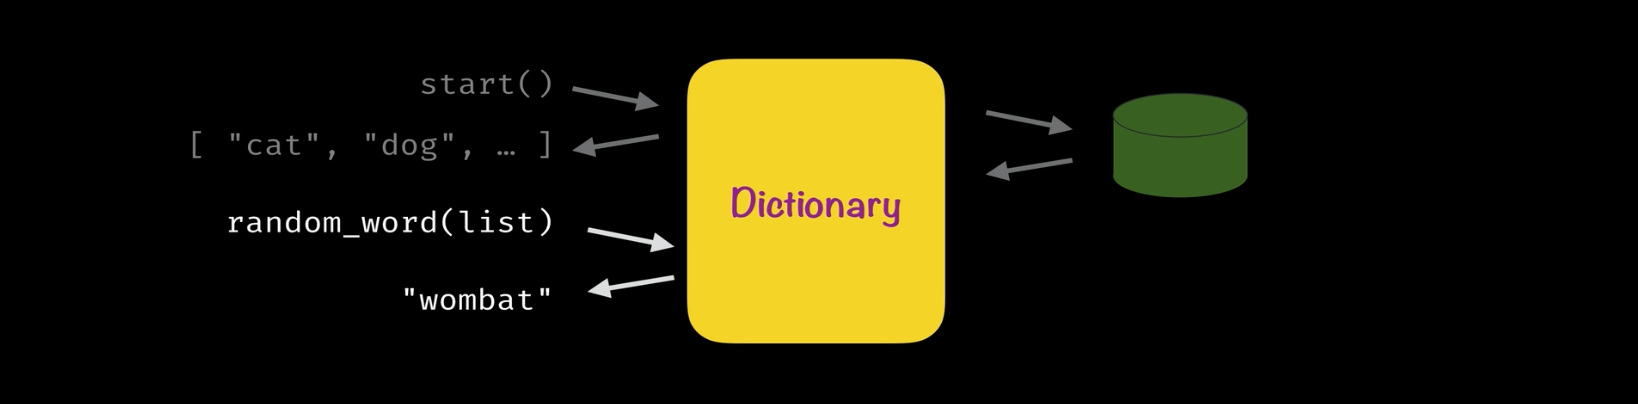 Dictionary architecture diagram 2